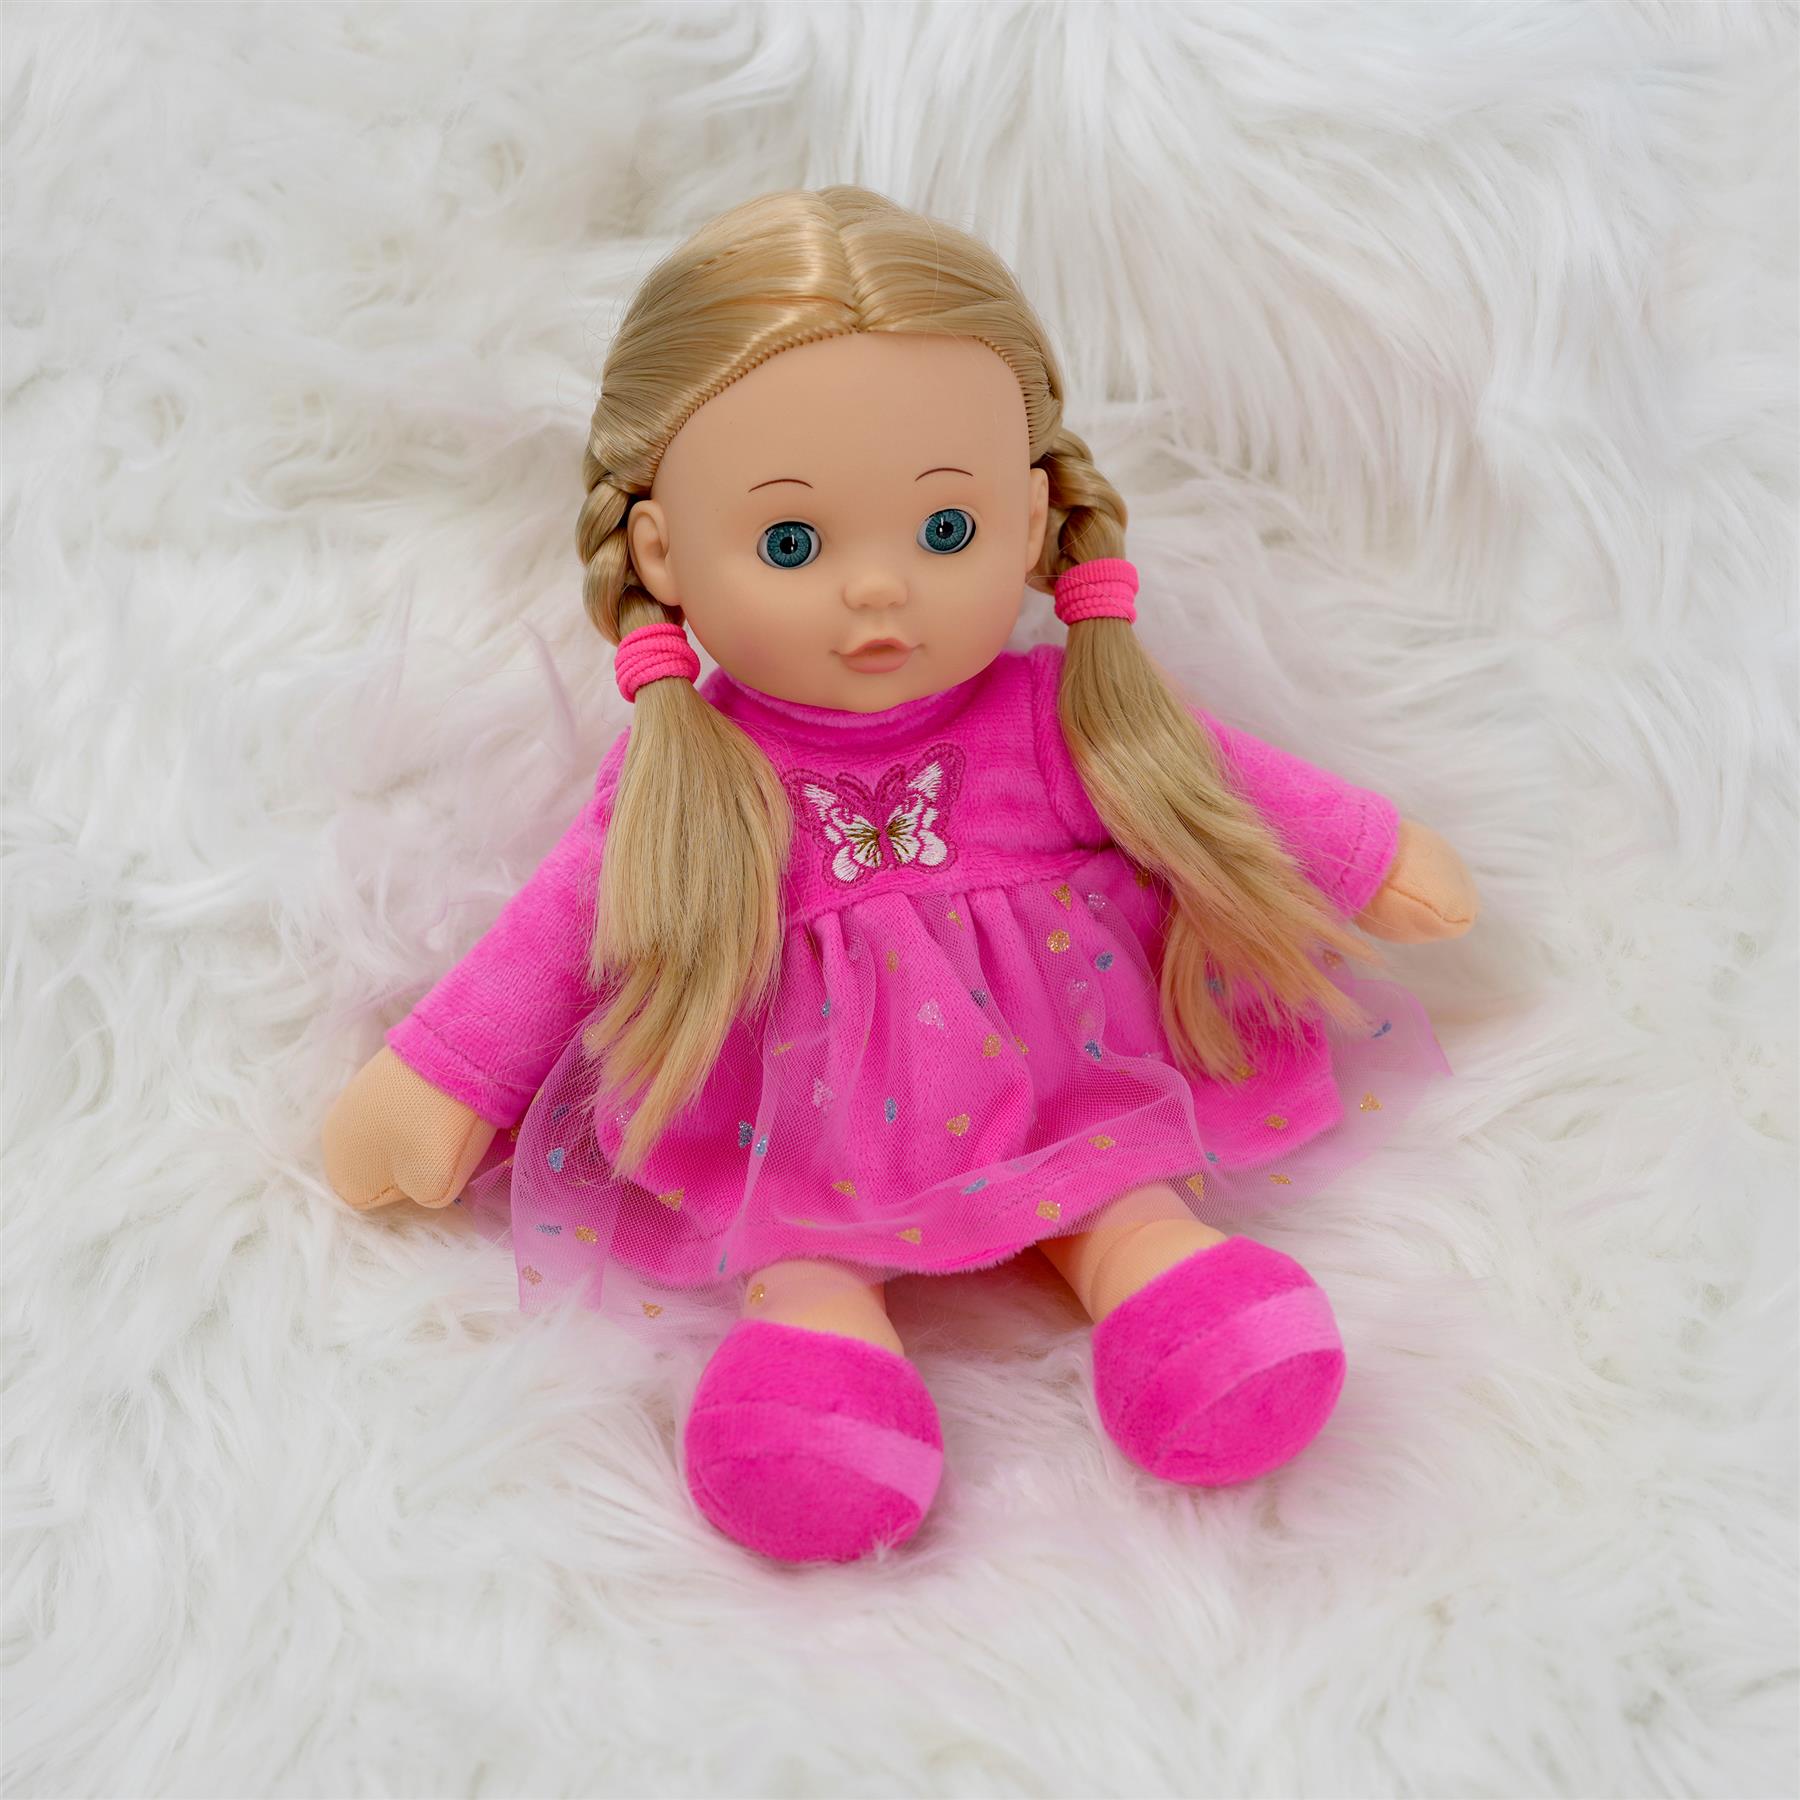 12” Baby Play Doll by BiBi Doll - UKBuyZone